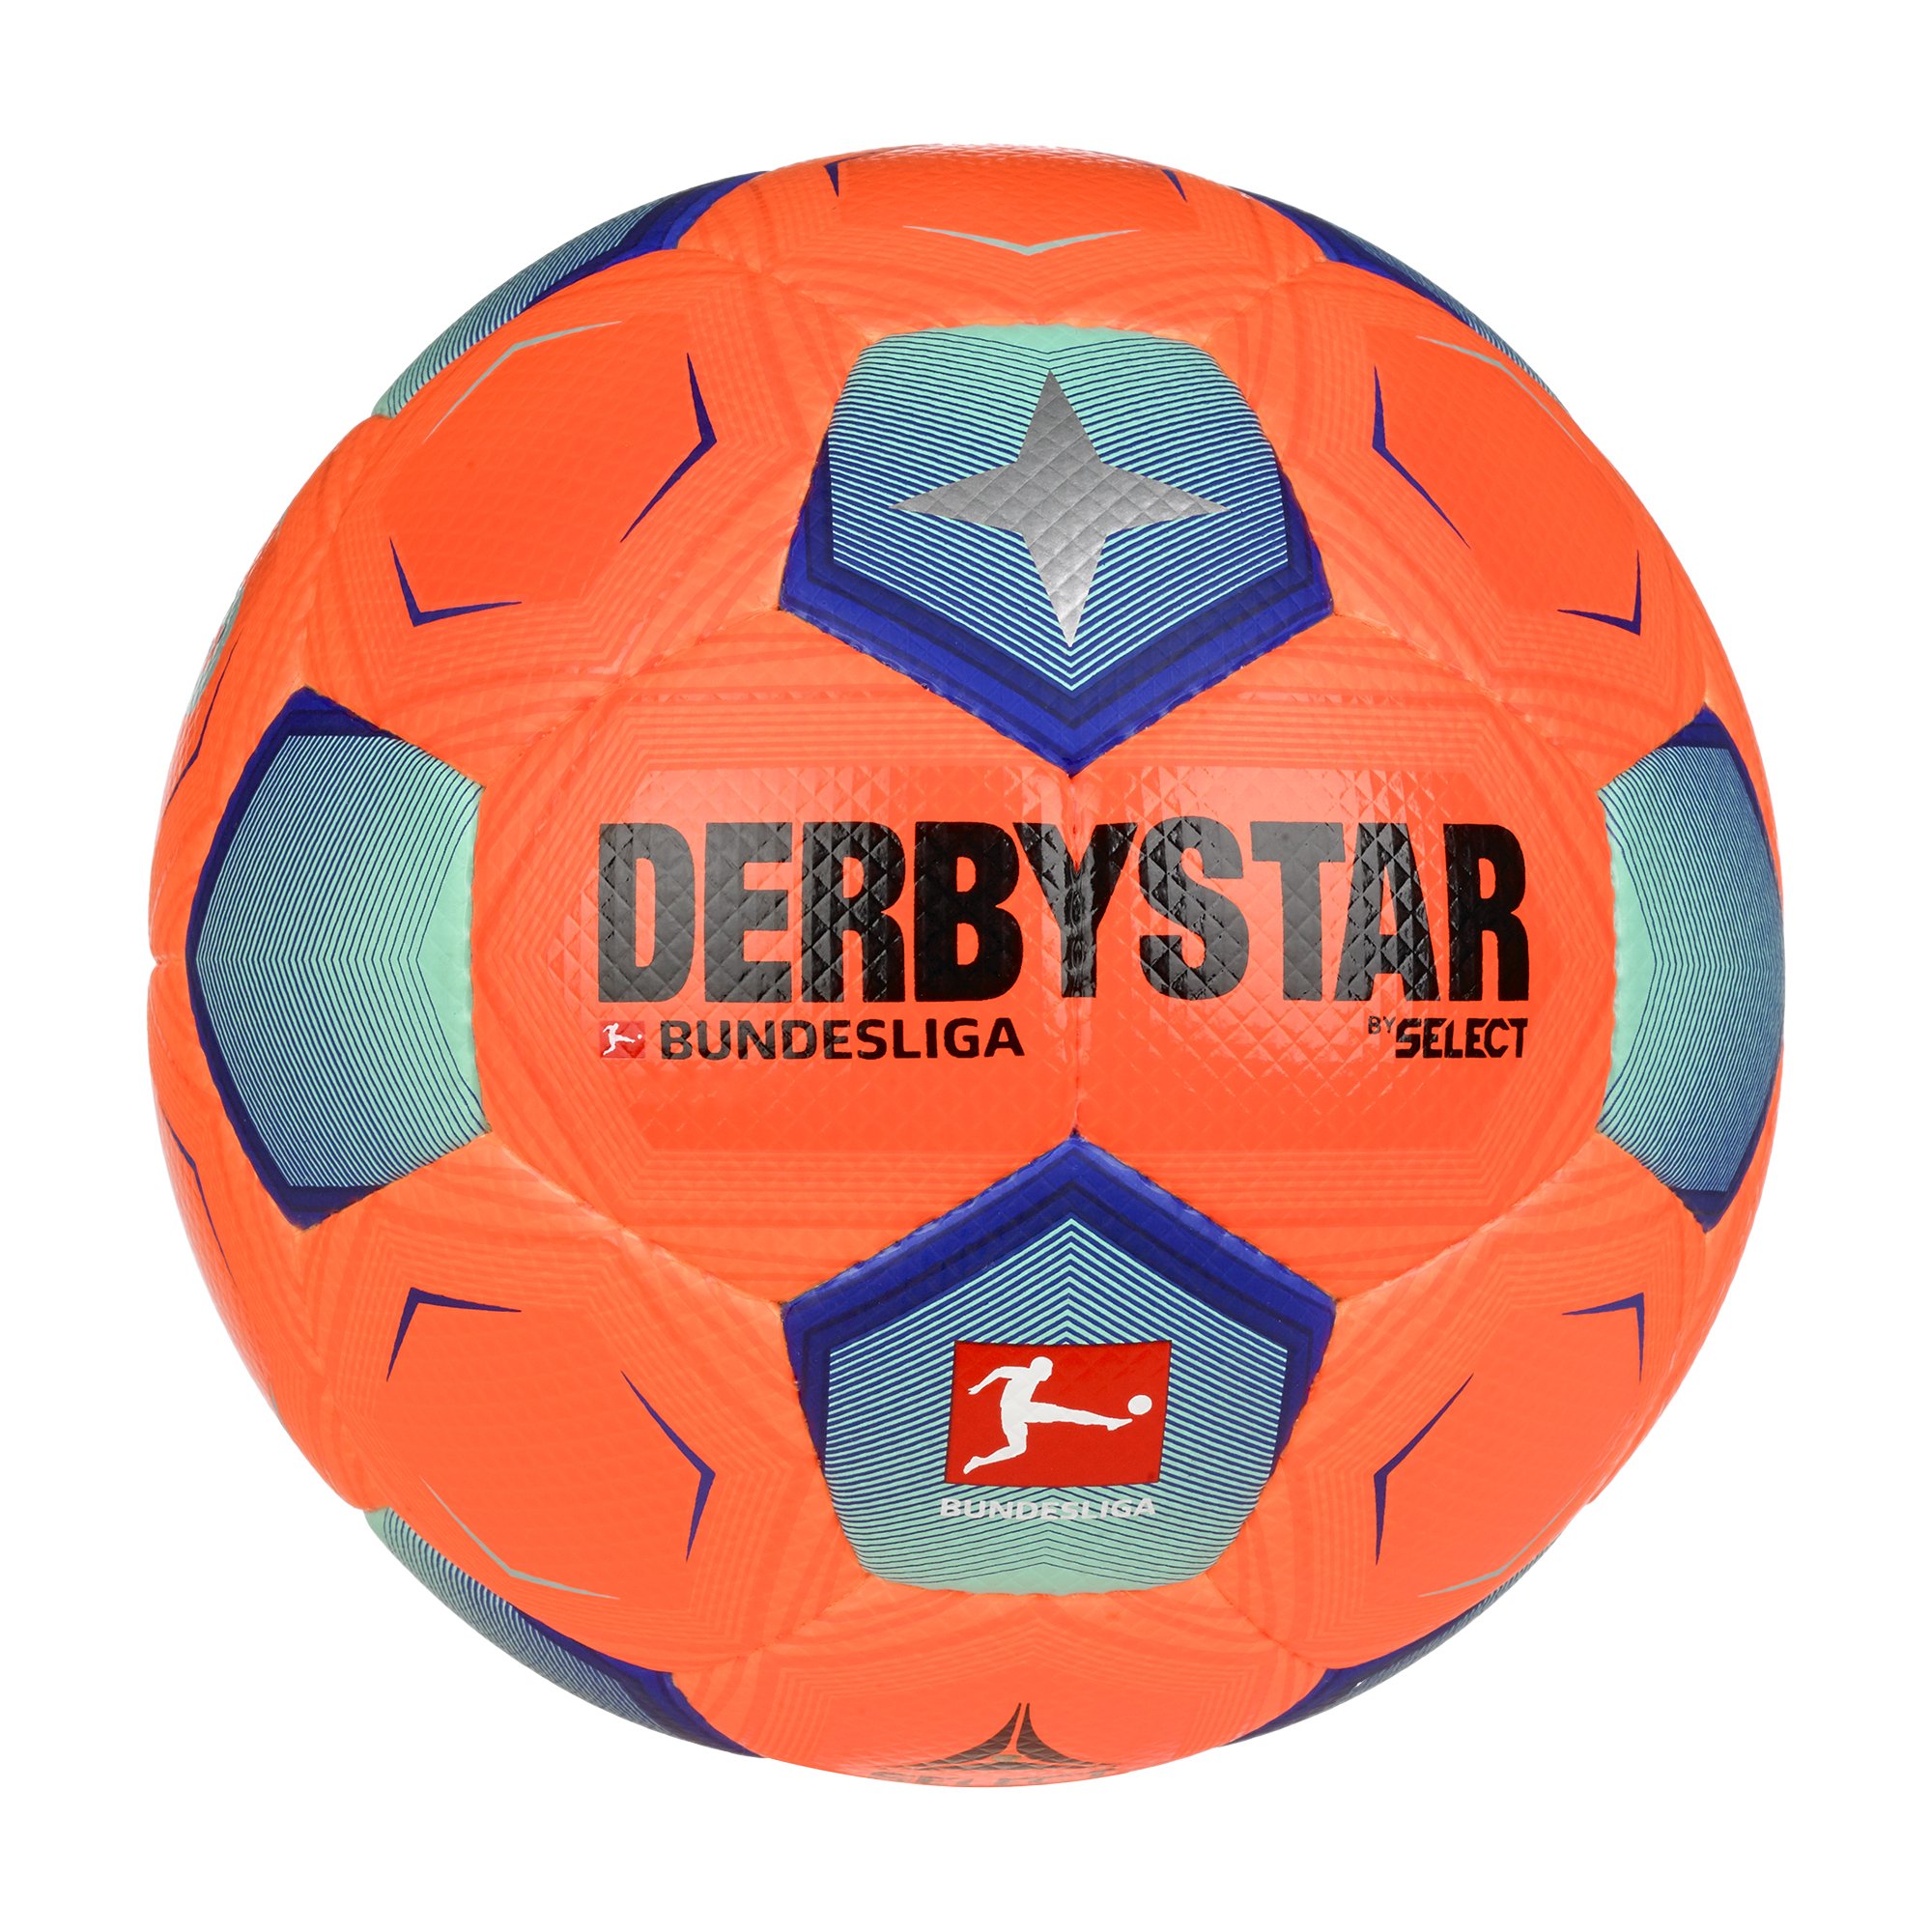 Derbystar Bundesliga Brillant Replica High Visible v23